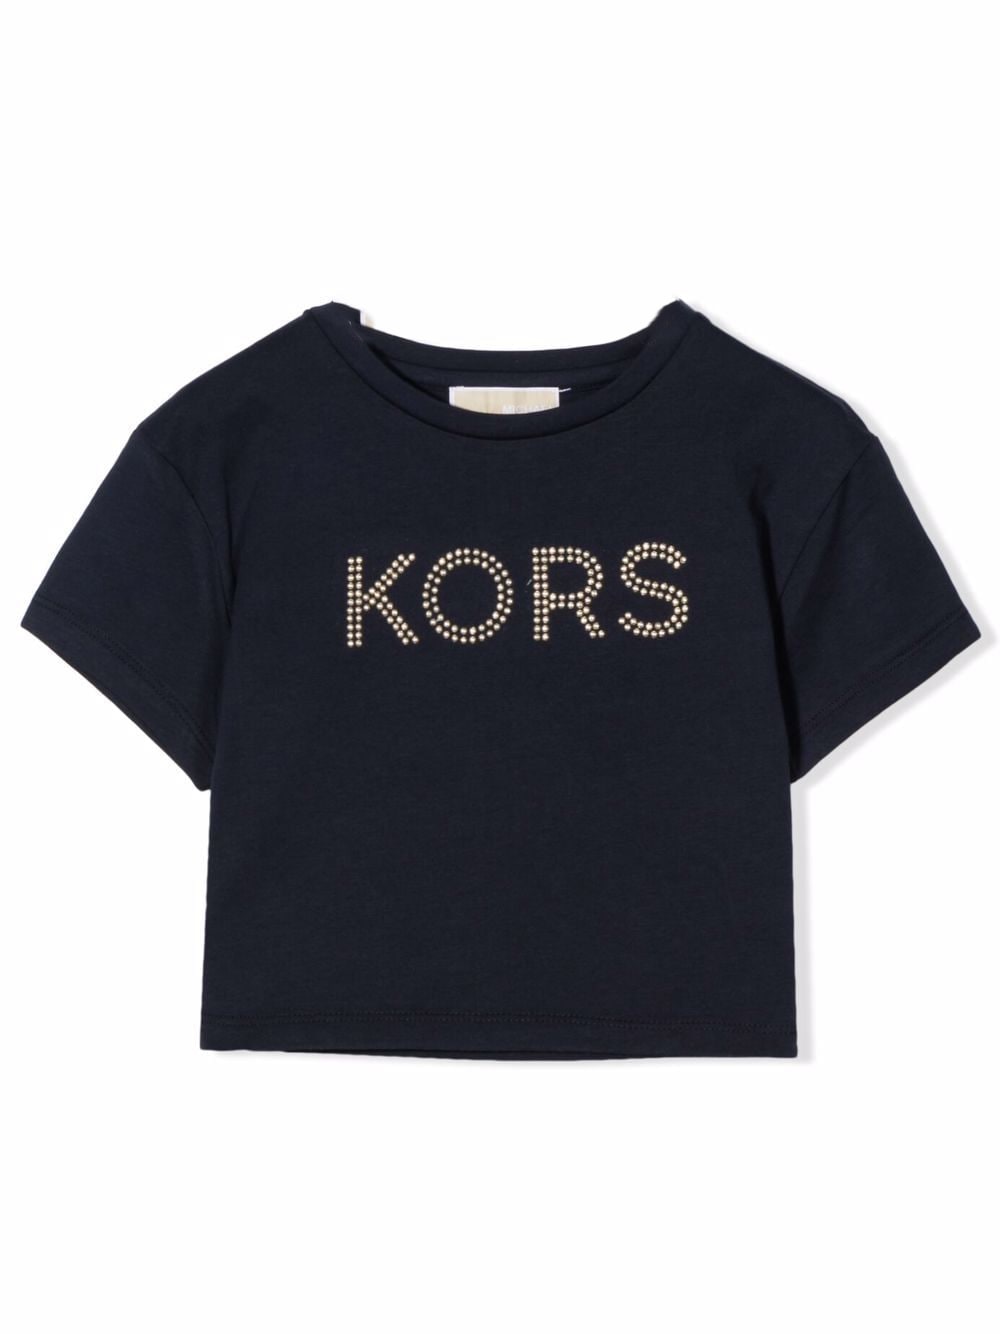 Michael Kors Studded T-shirt